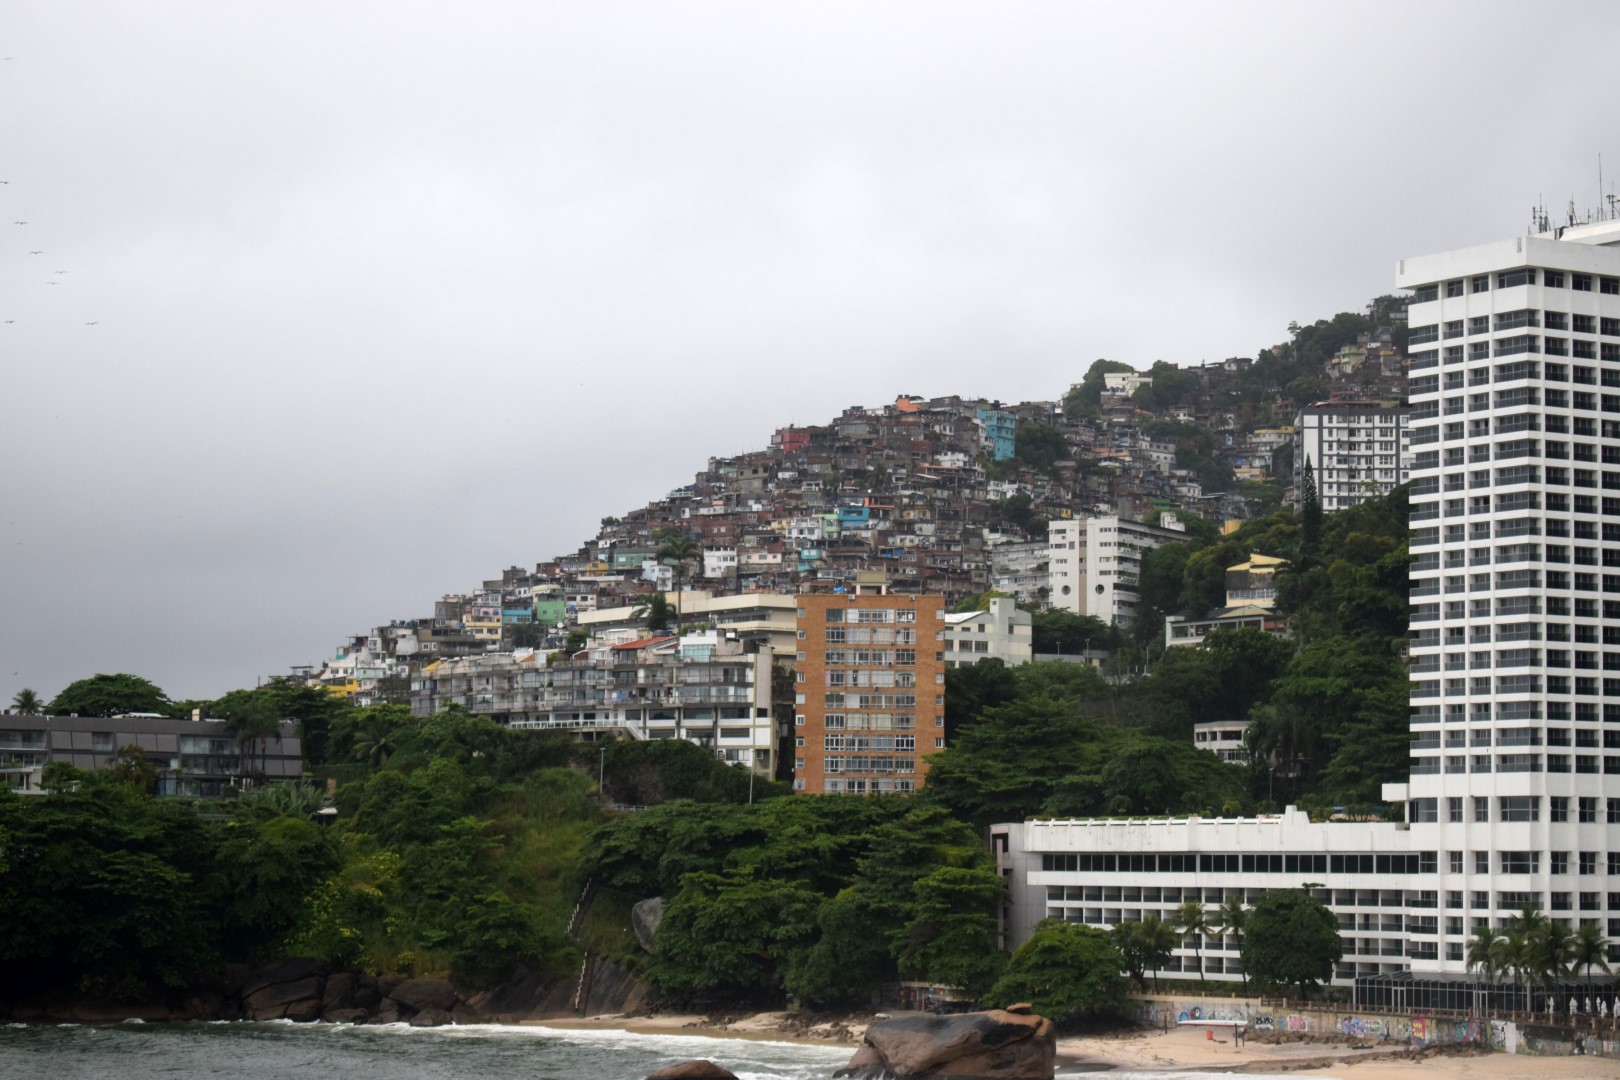 Favela Vidigal from Mirante do Leblon, Rio de Janeiro